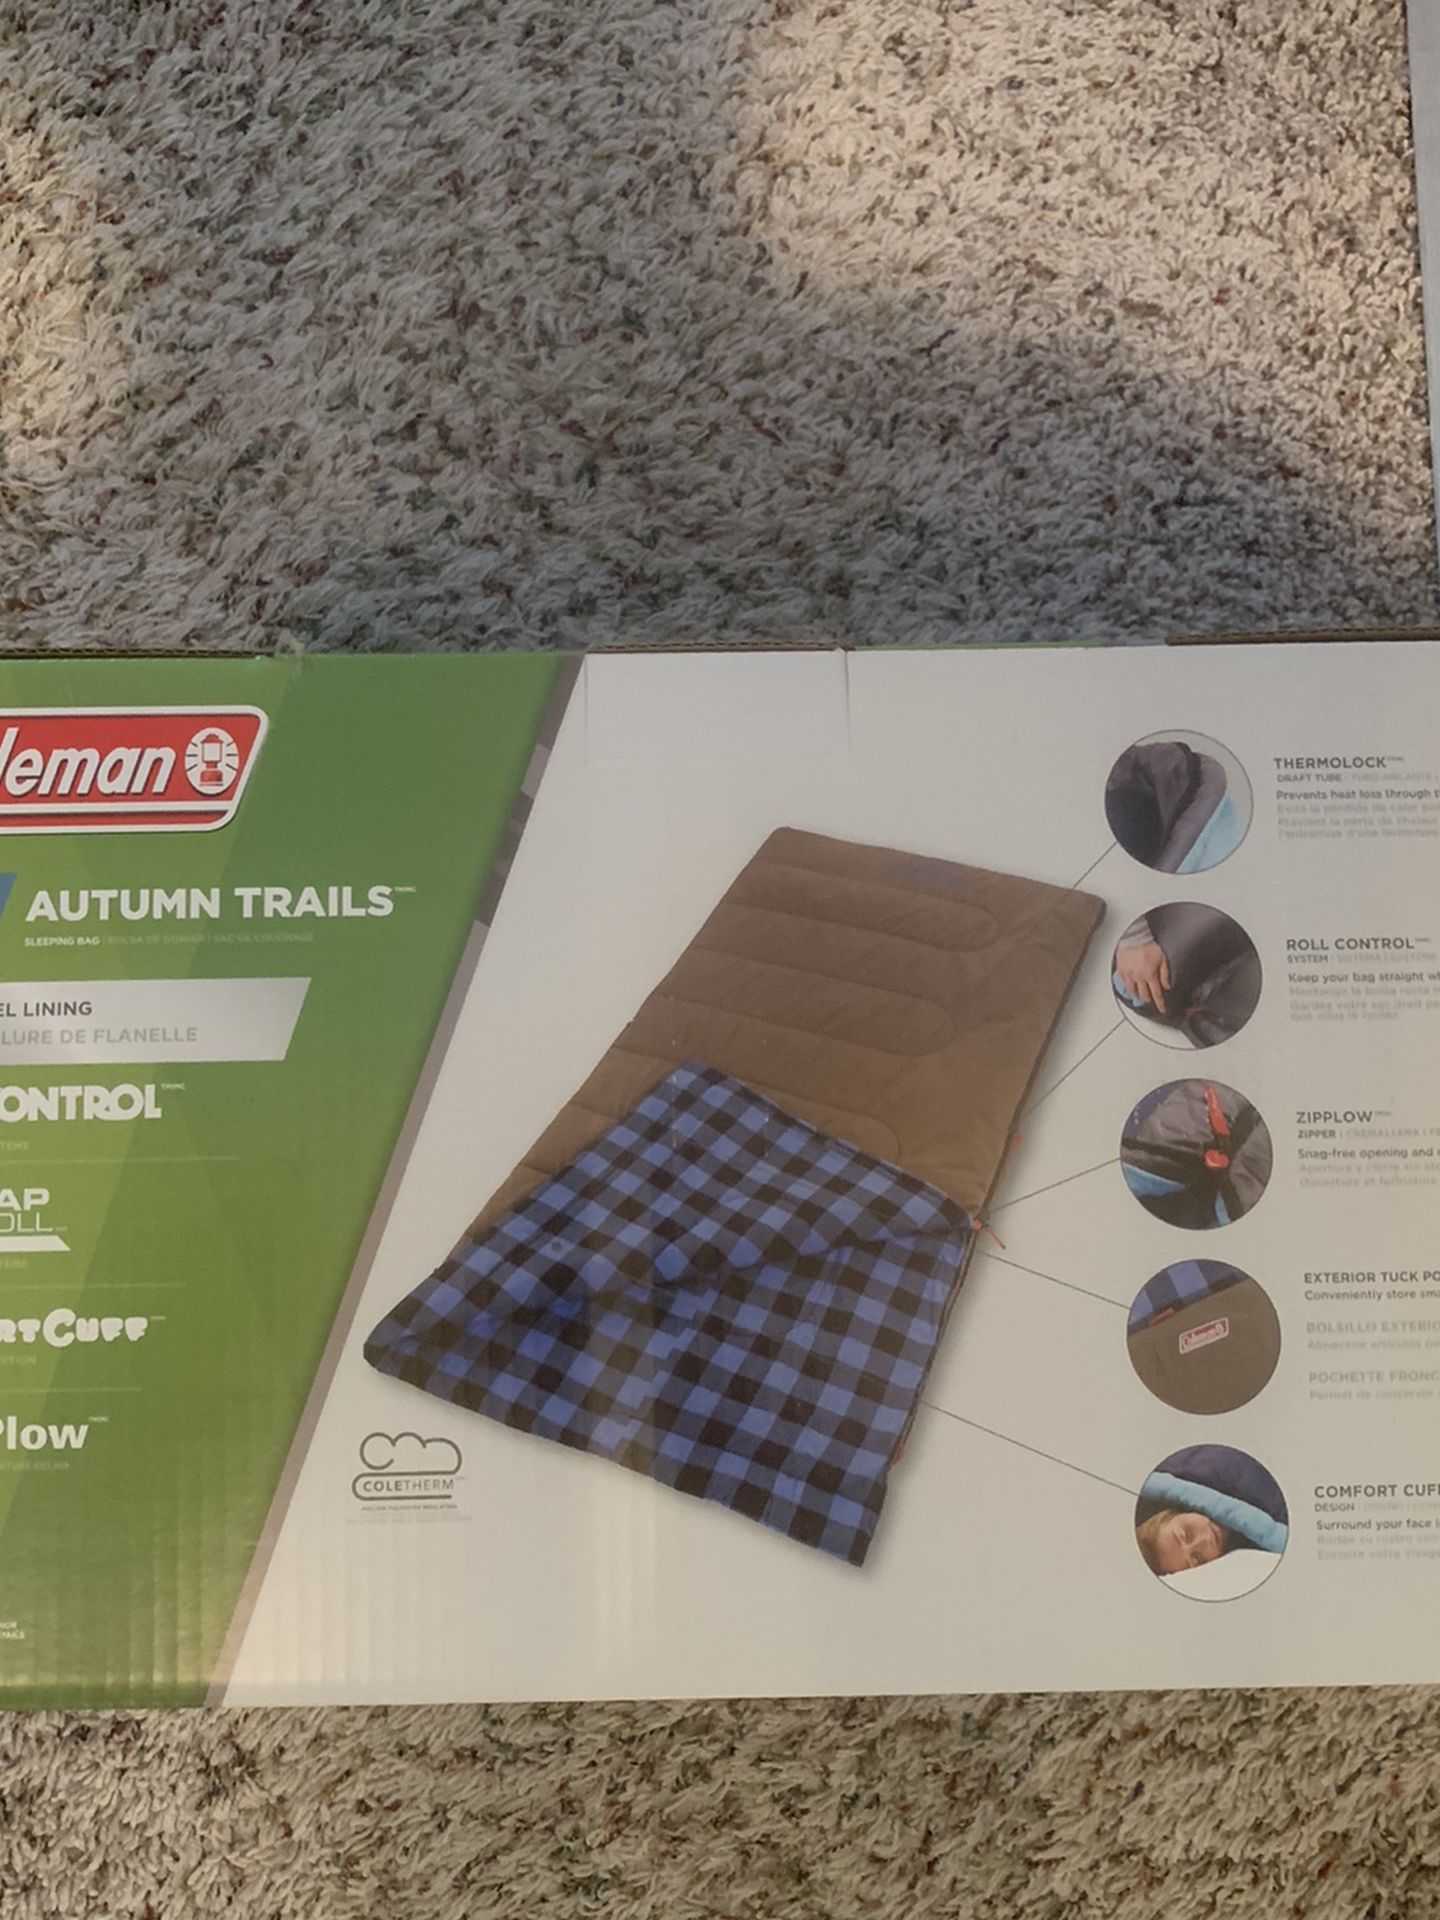 Coleman autumn trails sleeping bag